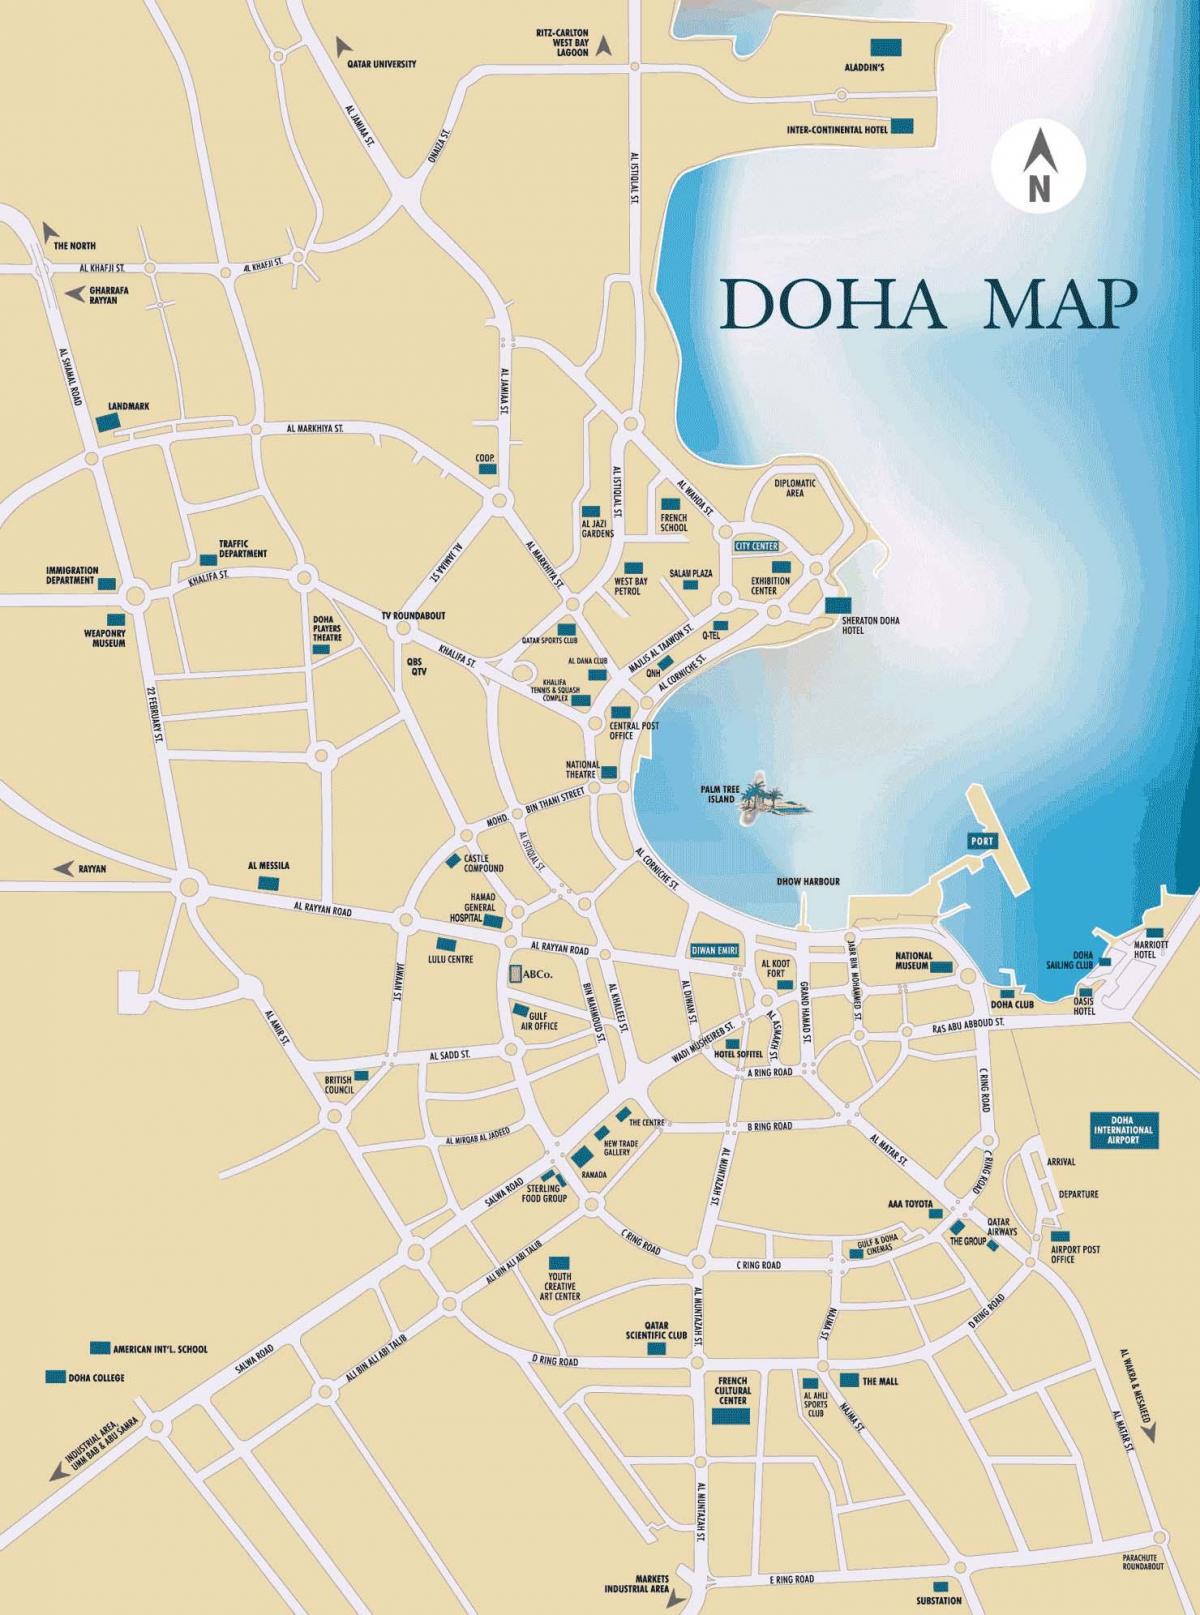 Mappa di doha, qatar